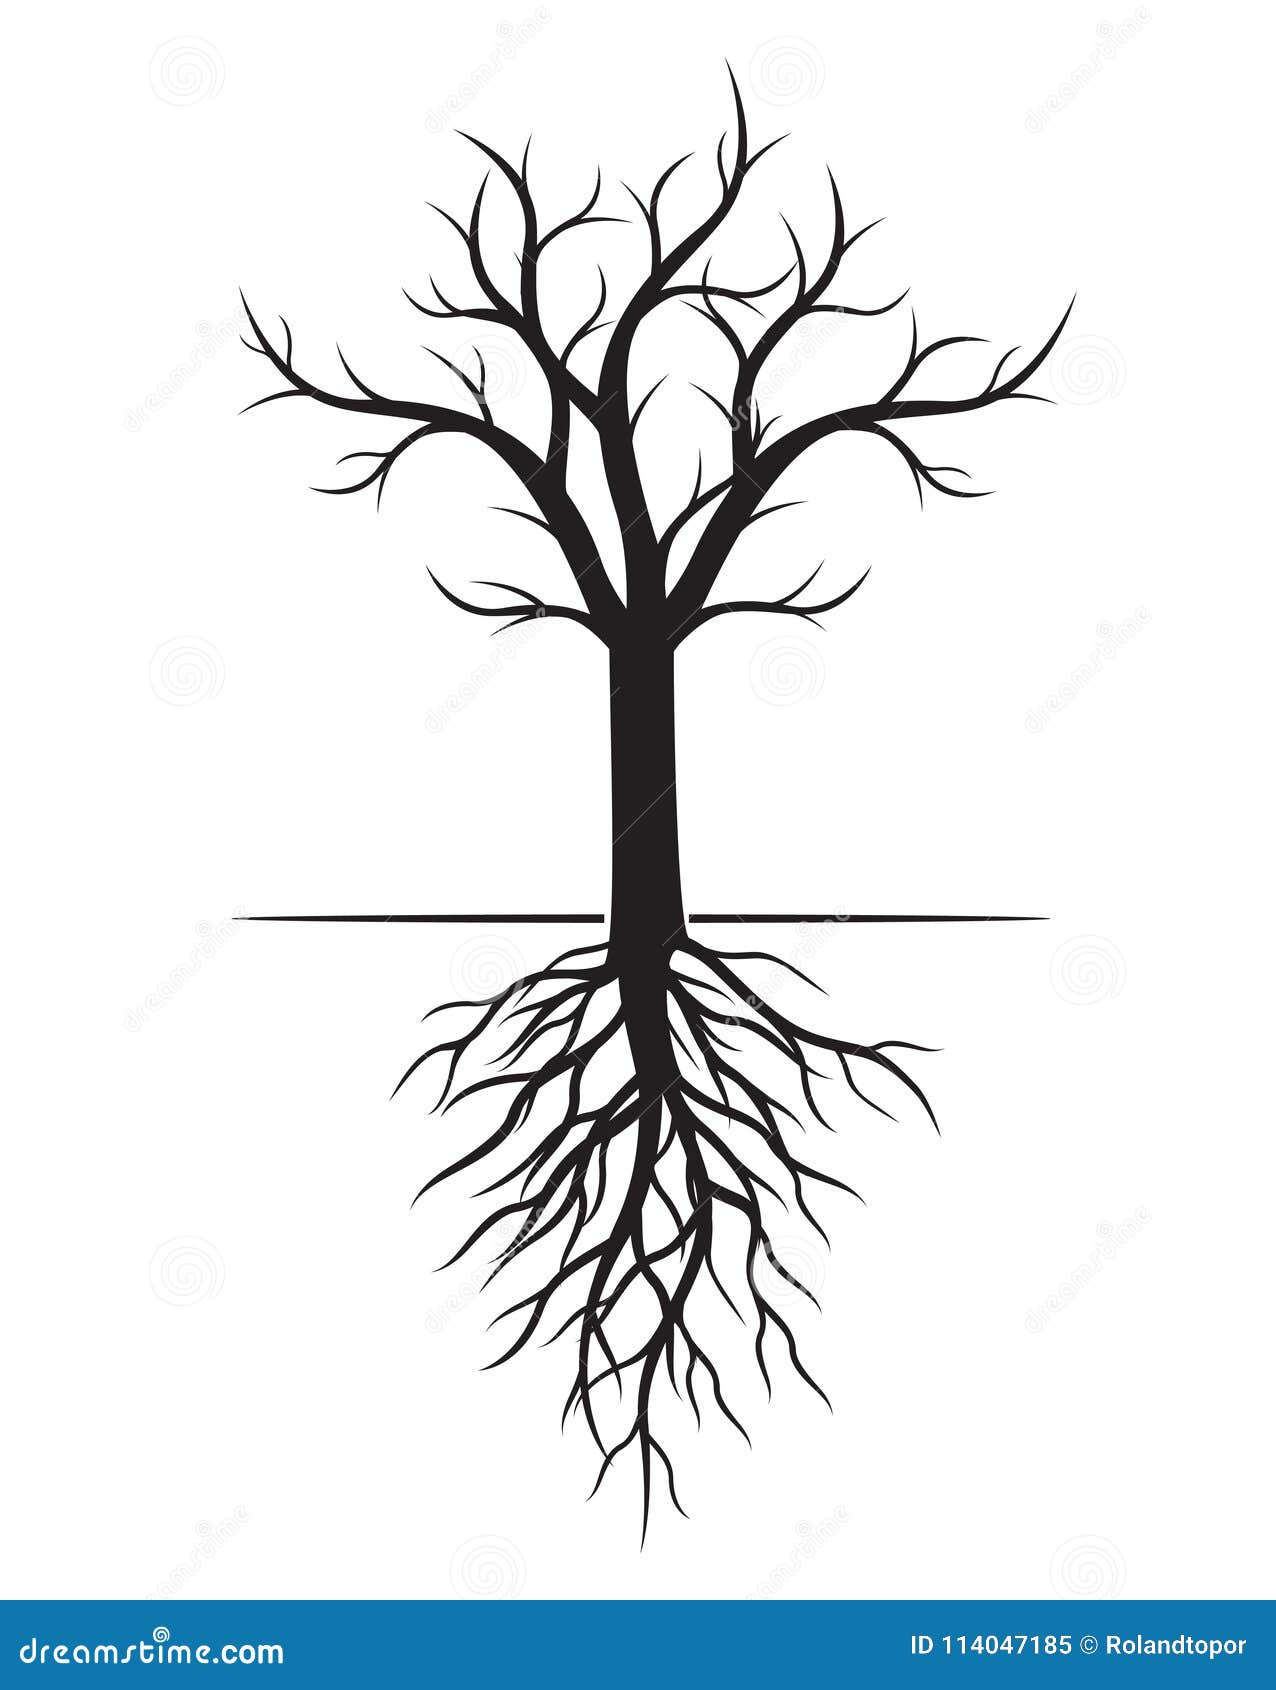 Root element. Дерево с корнями контур. Дерево с корнями вектор. Дерево с корнями вектор чб. Корни древнего дерева вектор.